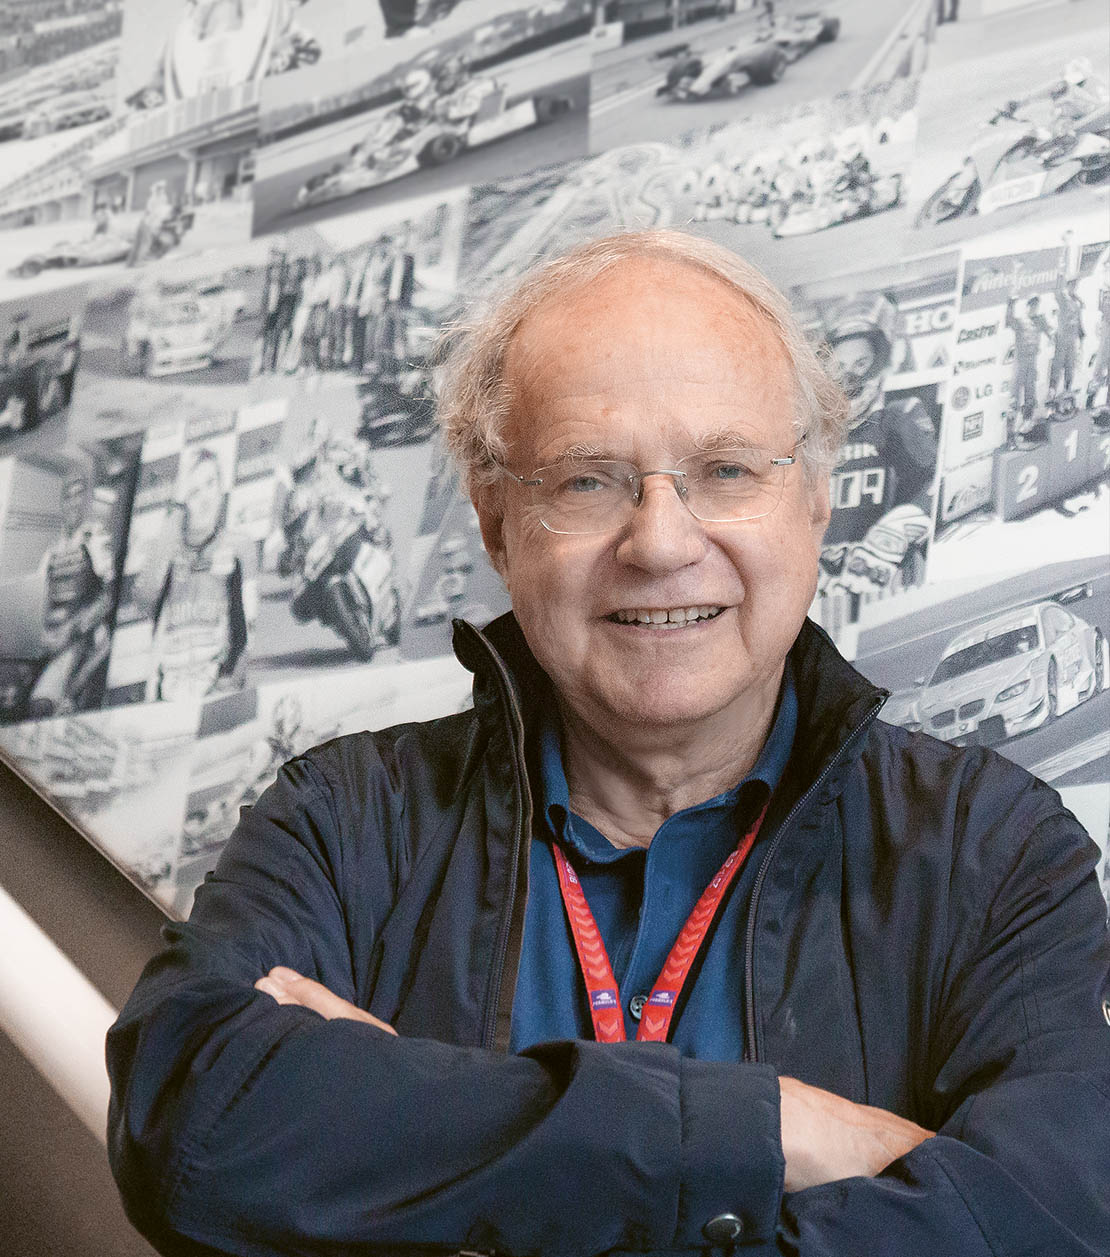 Prof. Dr. Burkhard Göschel, Formel E - High Voltage | Top Company Guide